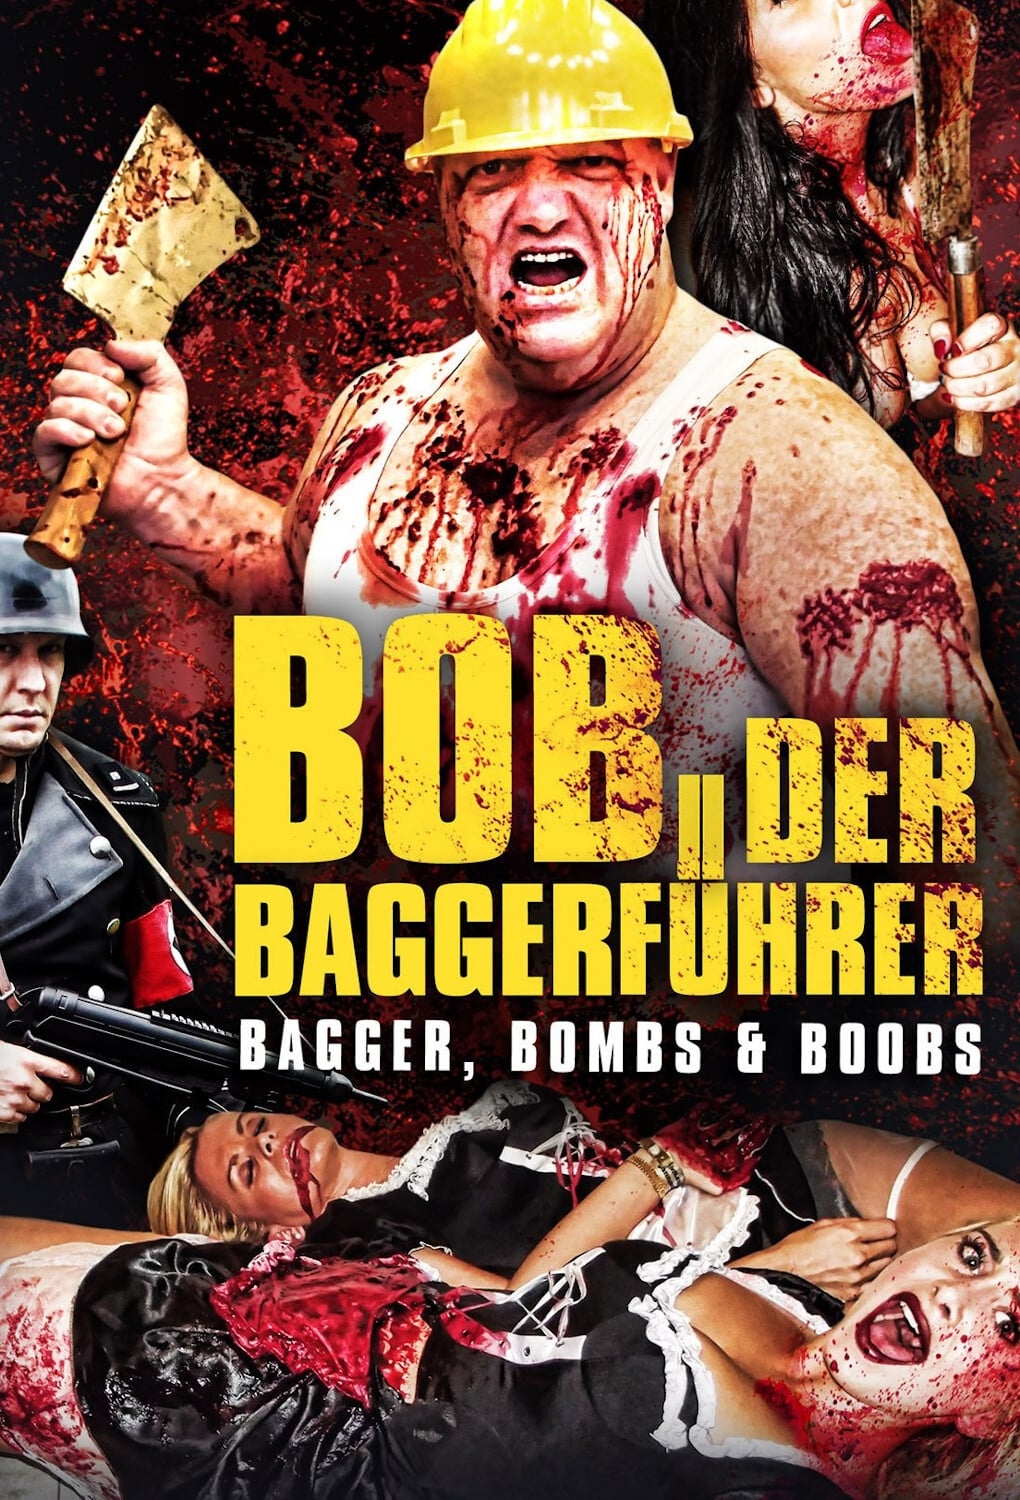 Baggerführer Bob